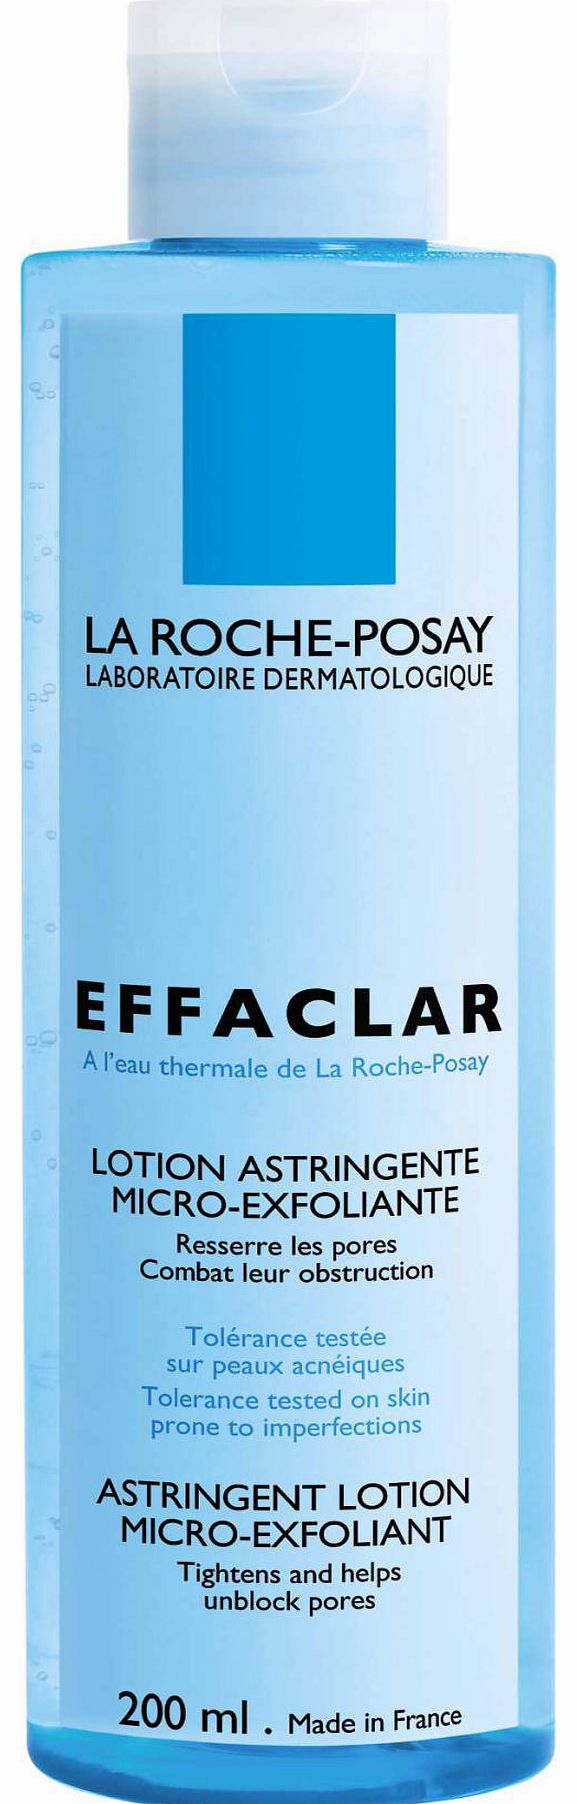 La Roche-Posay Effaclar Clarifying Lotion